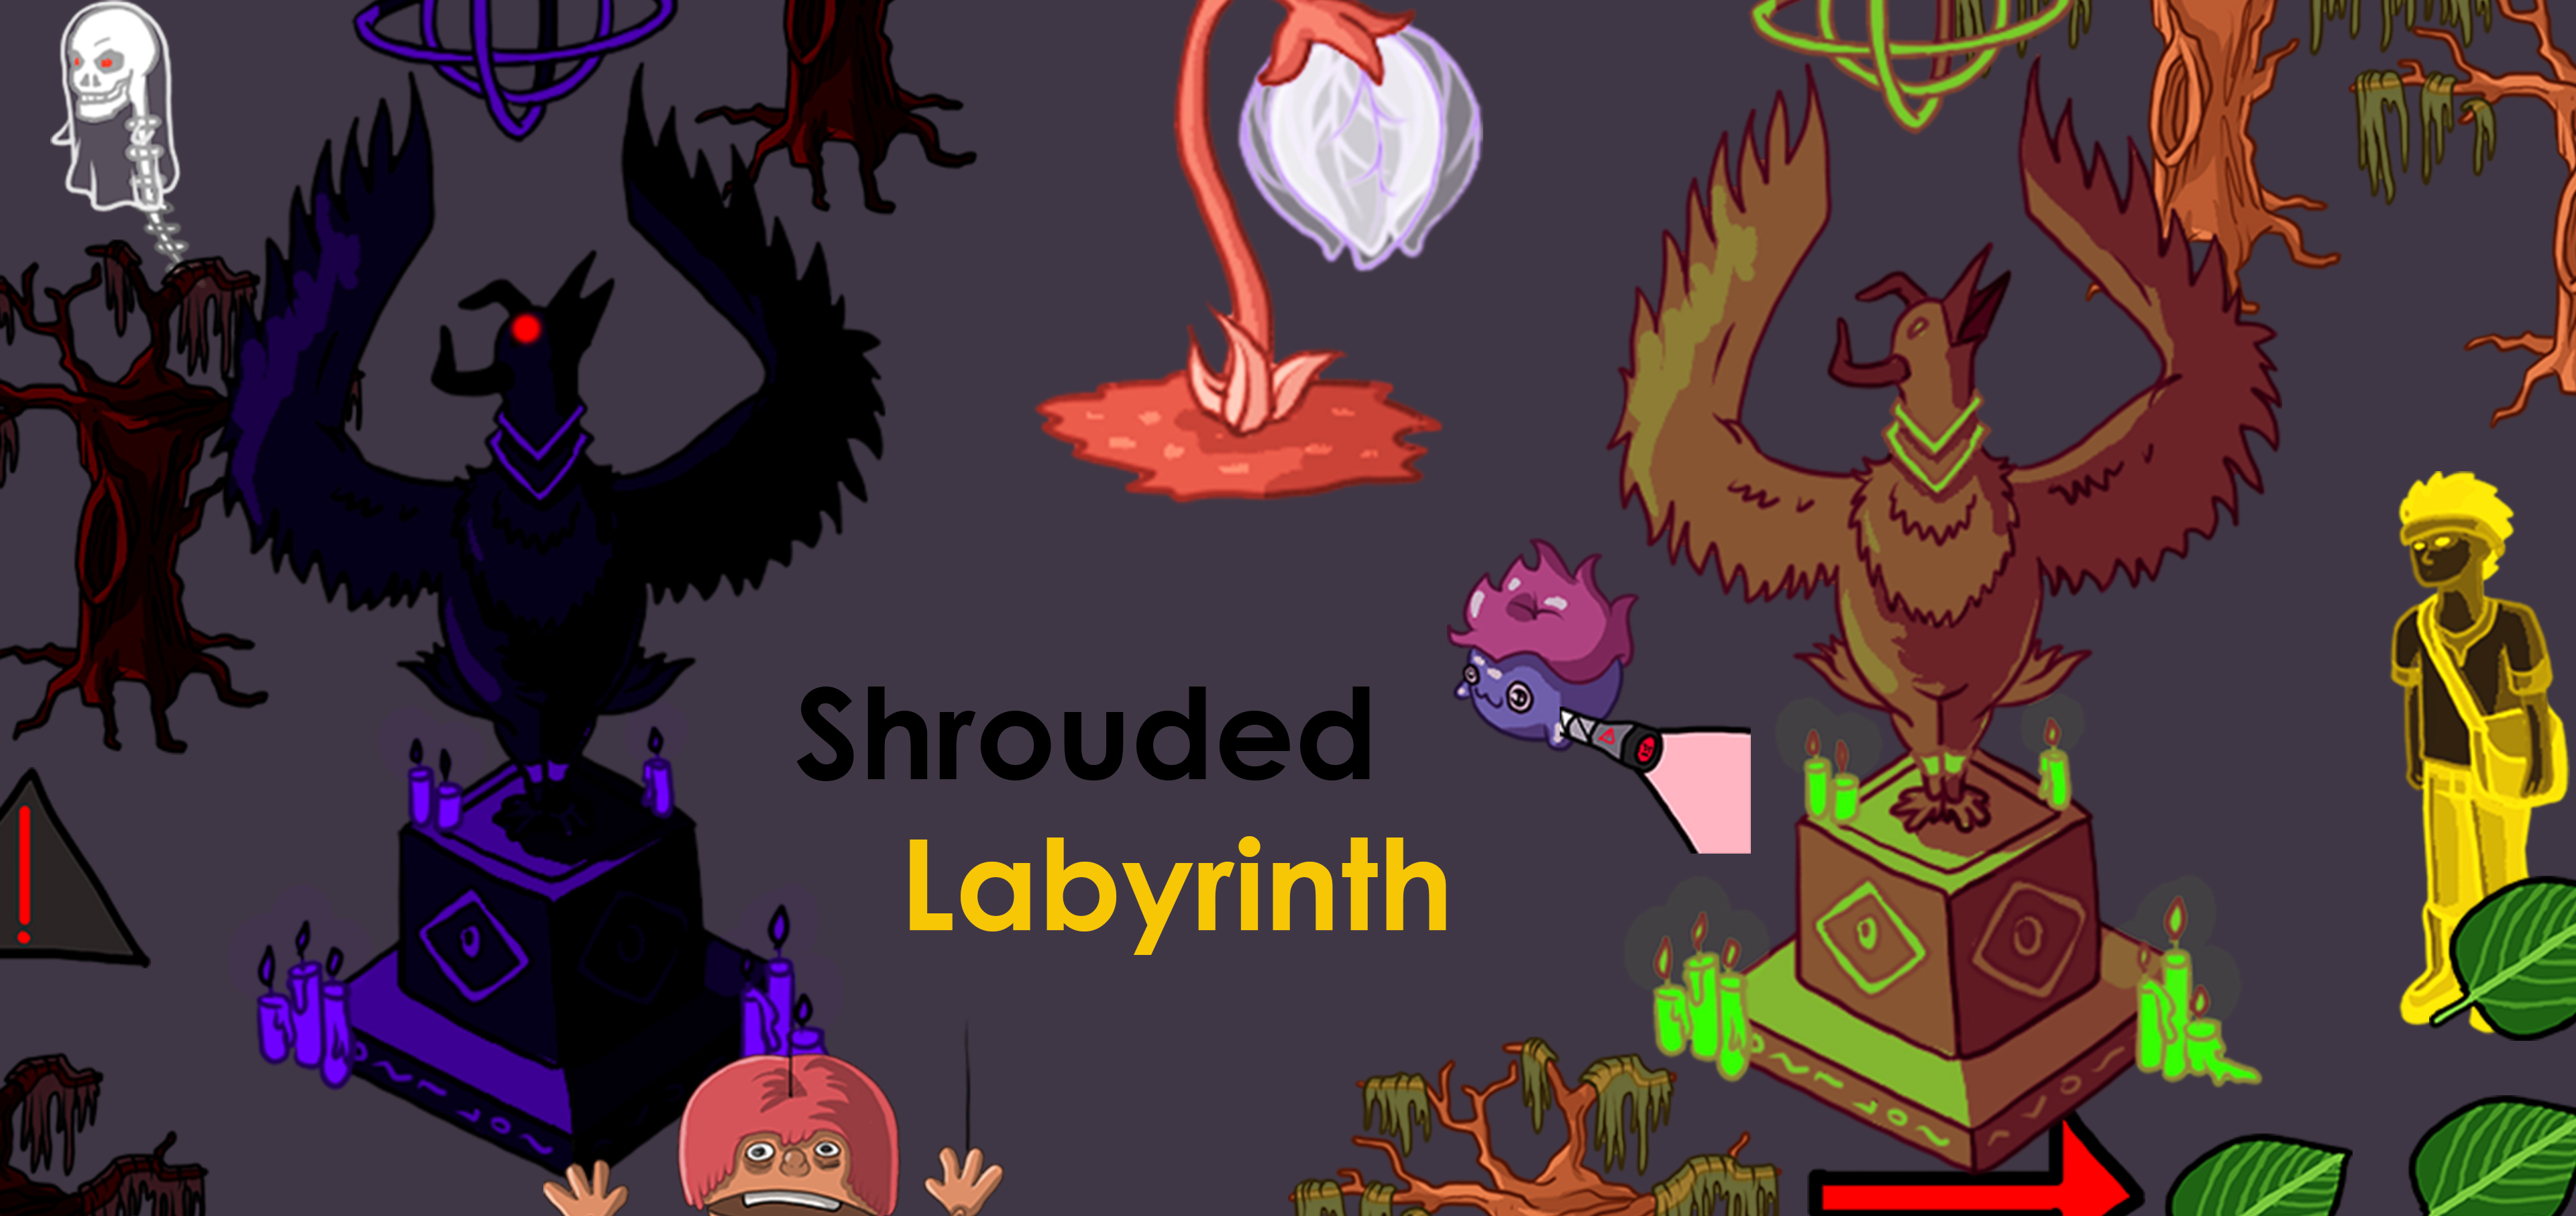 Shrouded Labyrinth